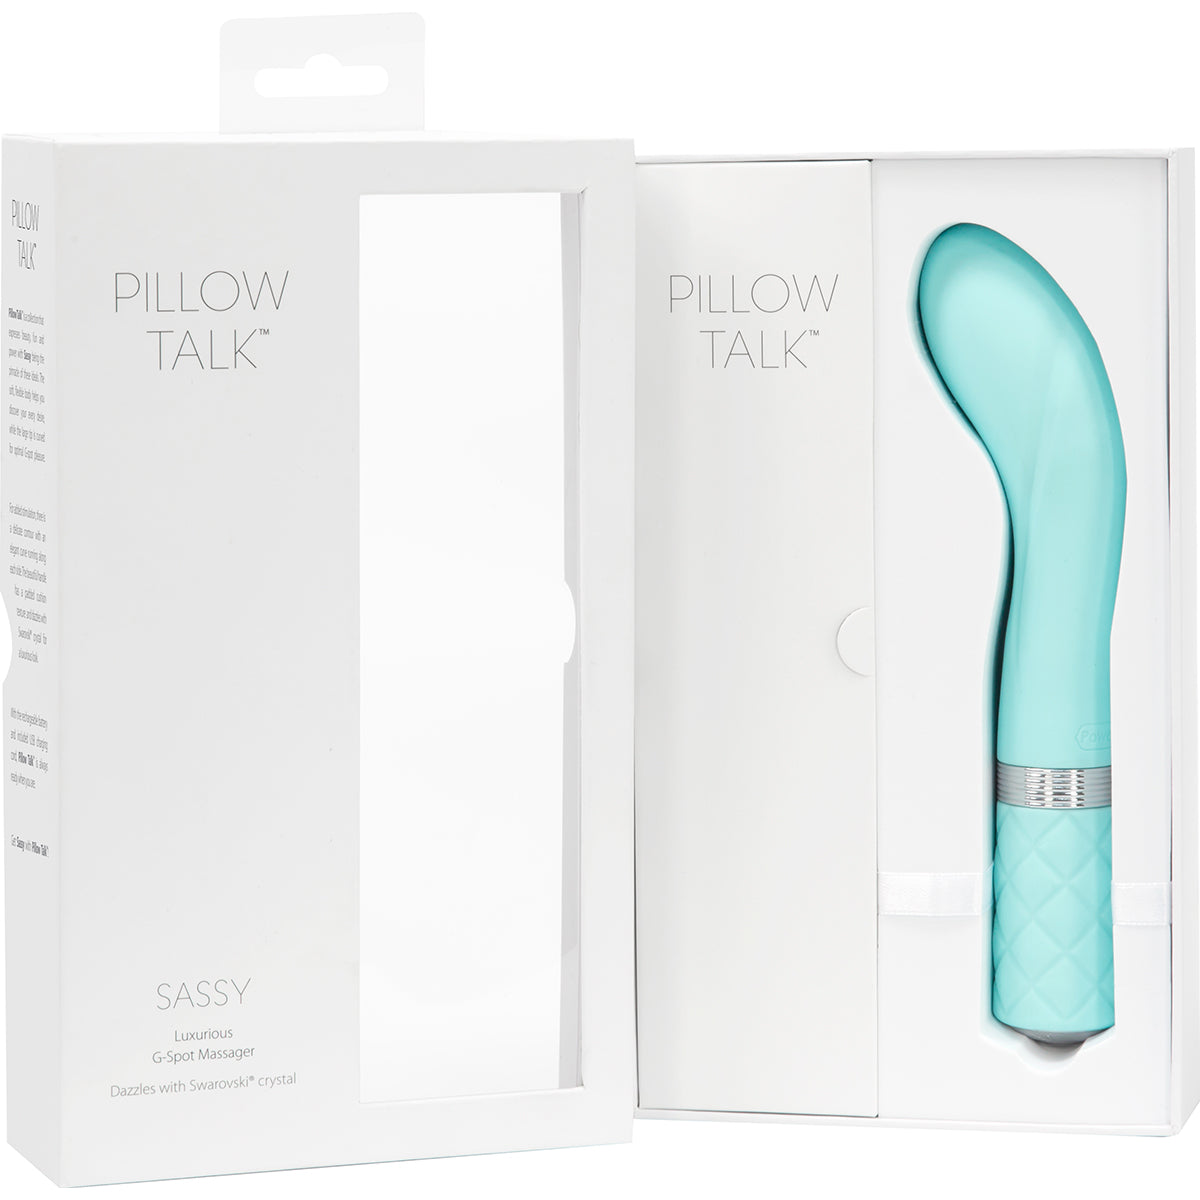 Pillow Talk Sassy G-spot Teal - Zateo Joy